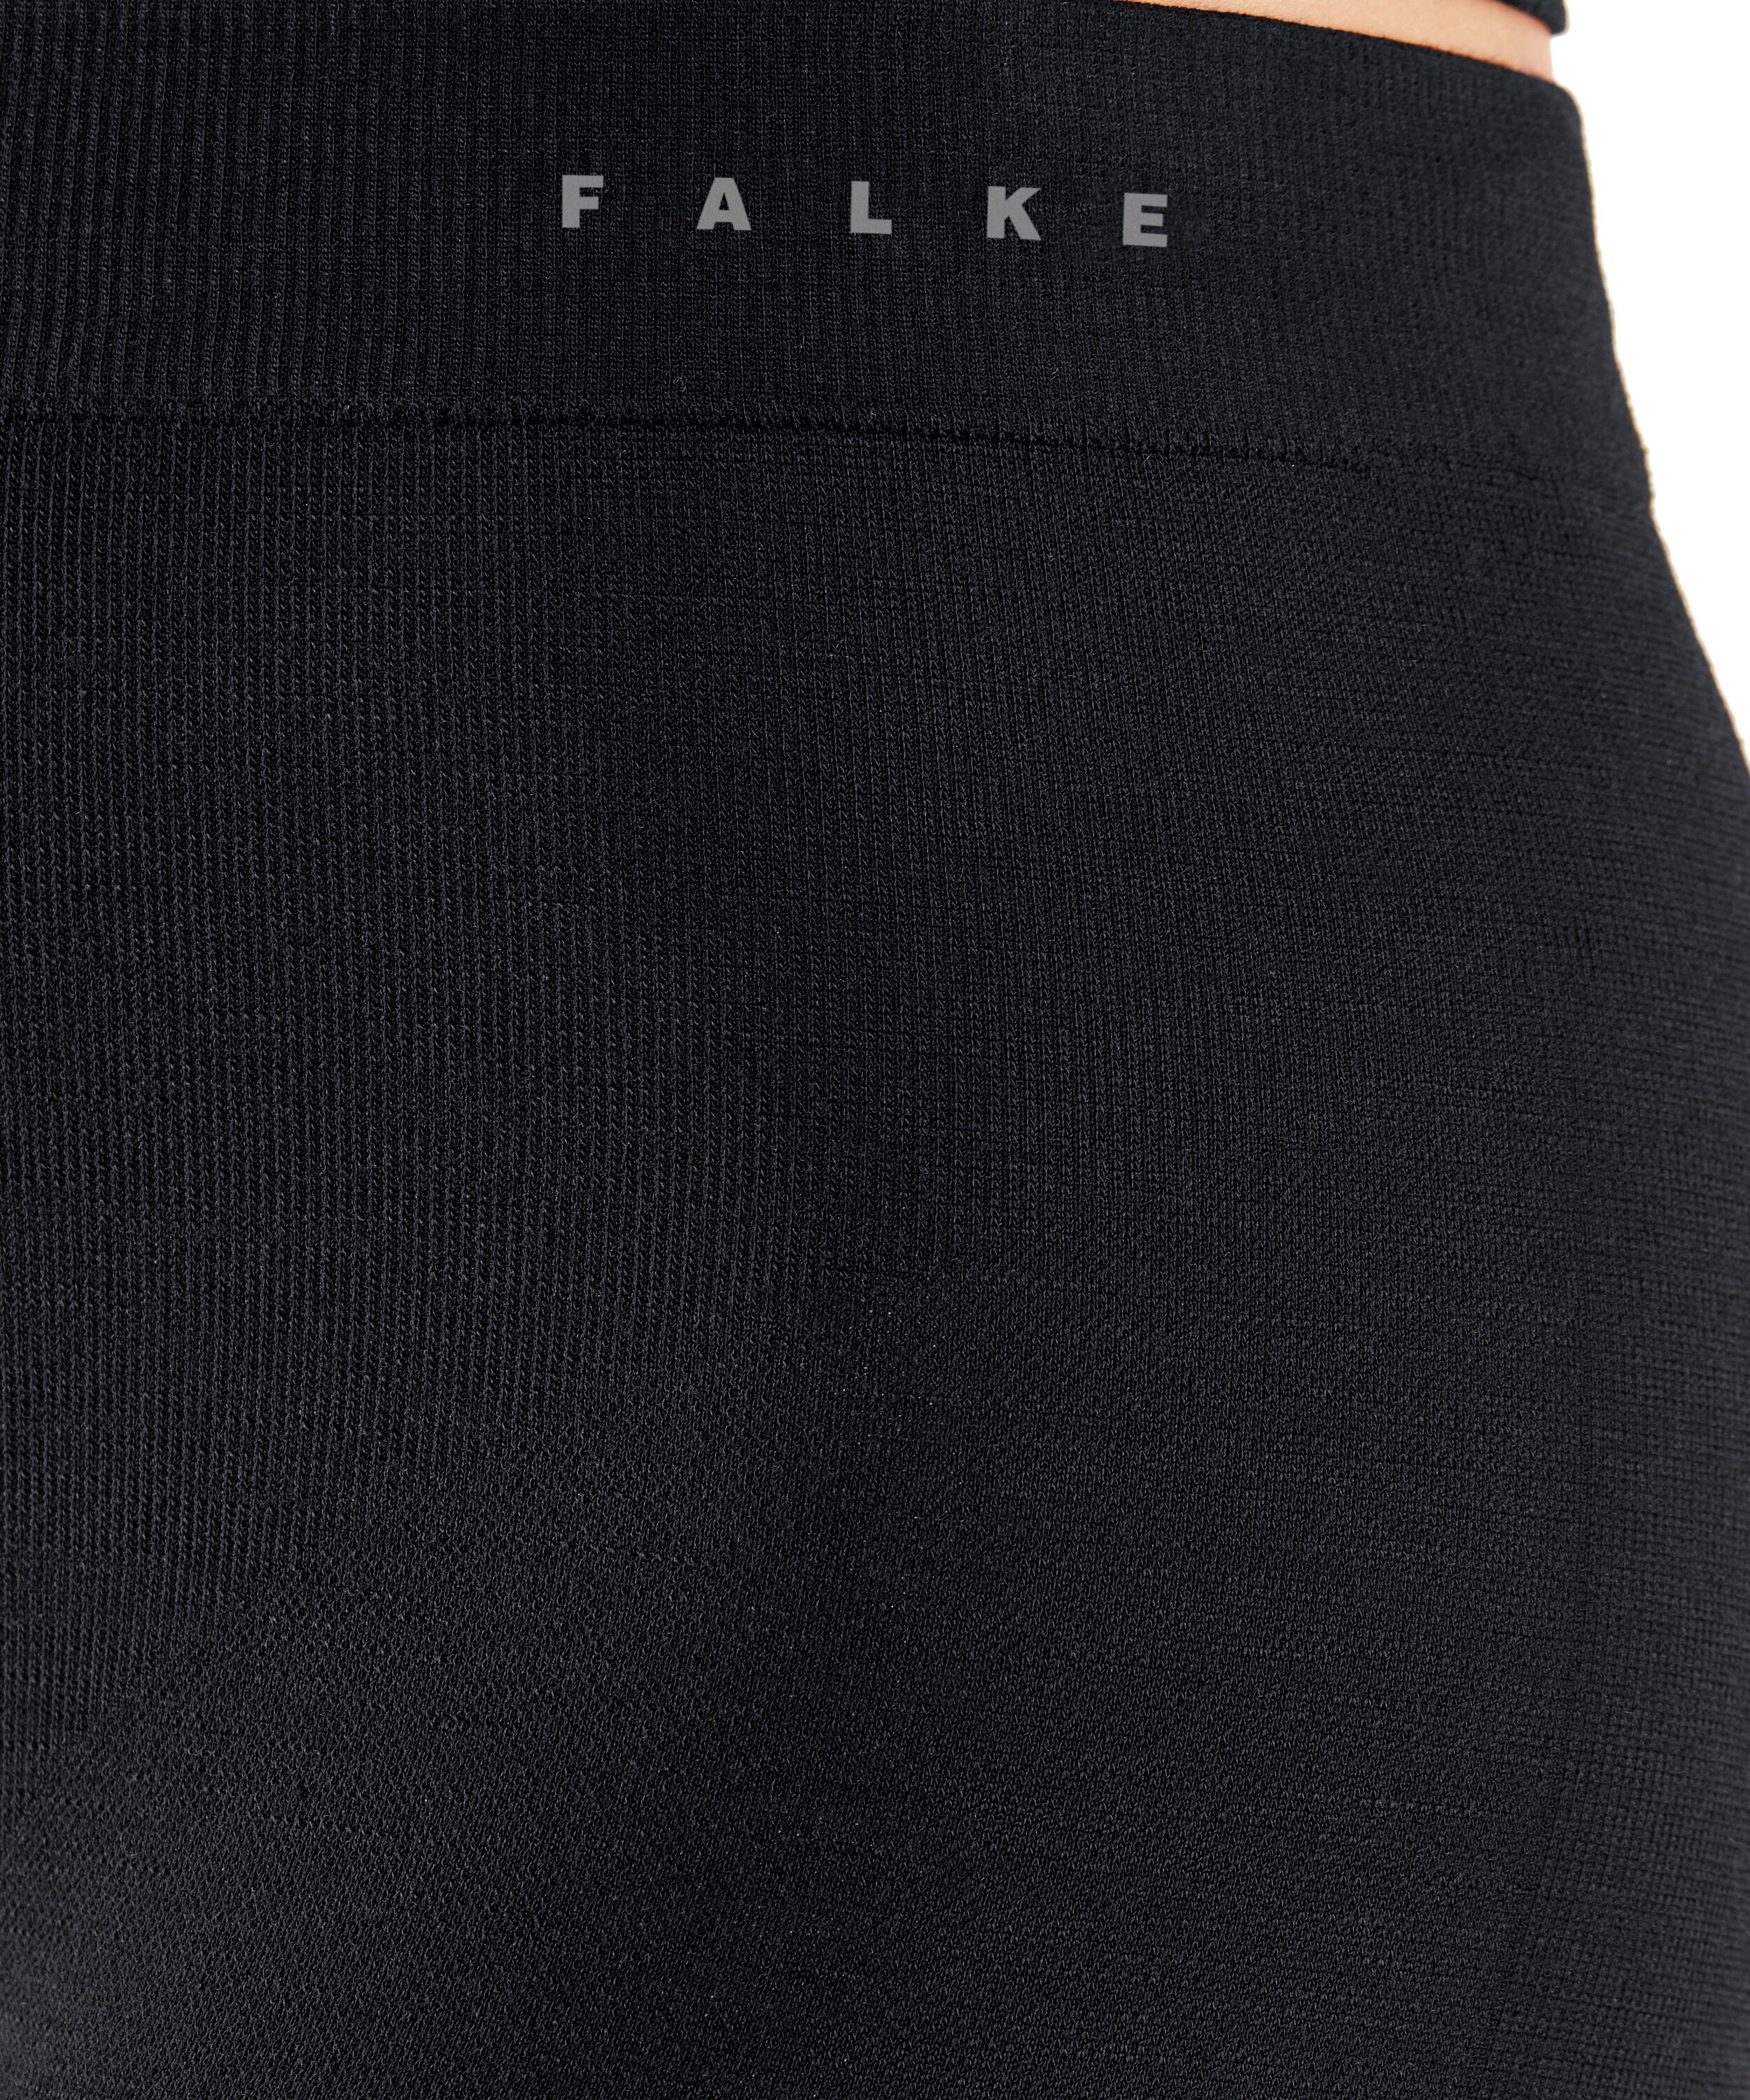 Merinowolle Light (1-St) black FALKE (3000) mit Wool-Tech Thermounterhose feinster